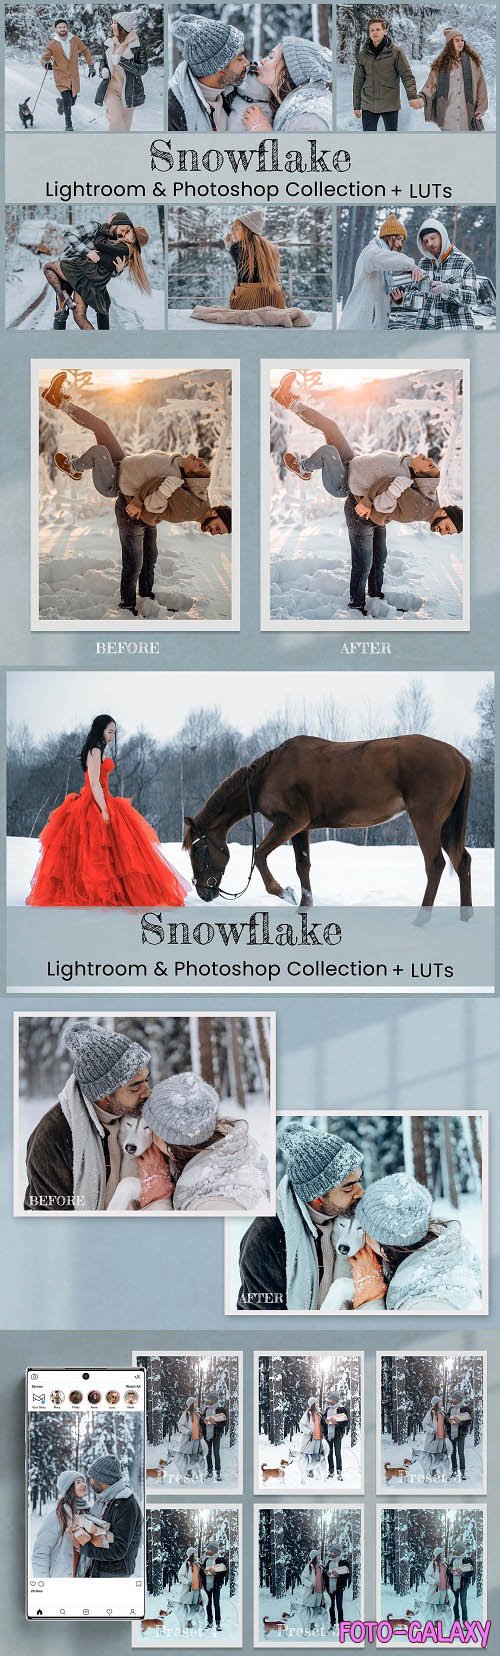 Snowflake Lightroom Photoshop LUTs - 6573896